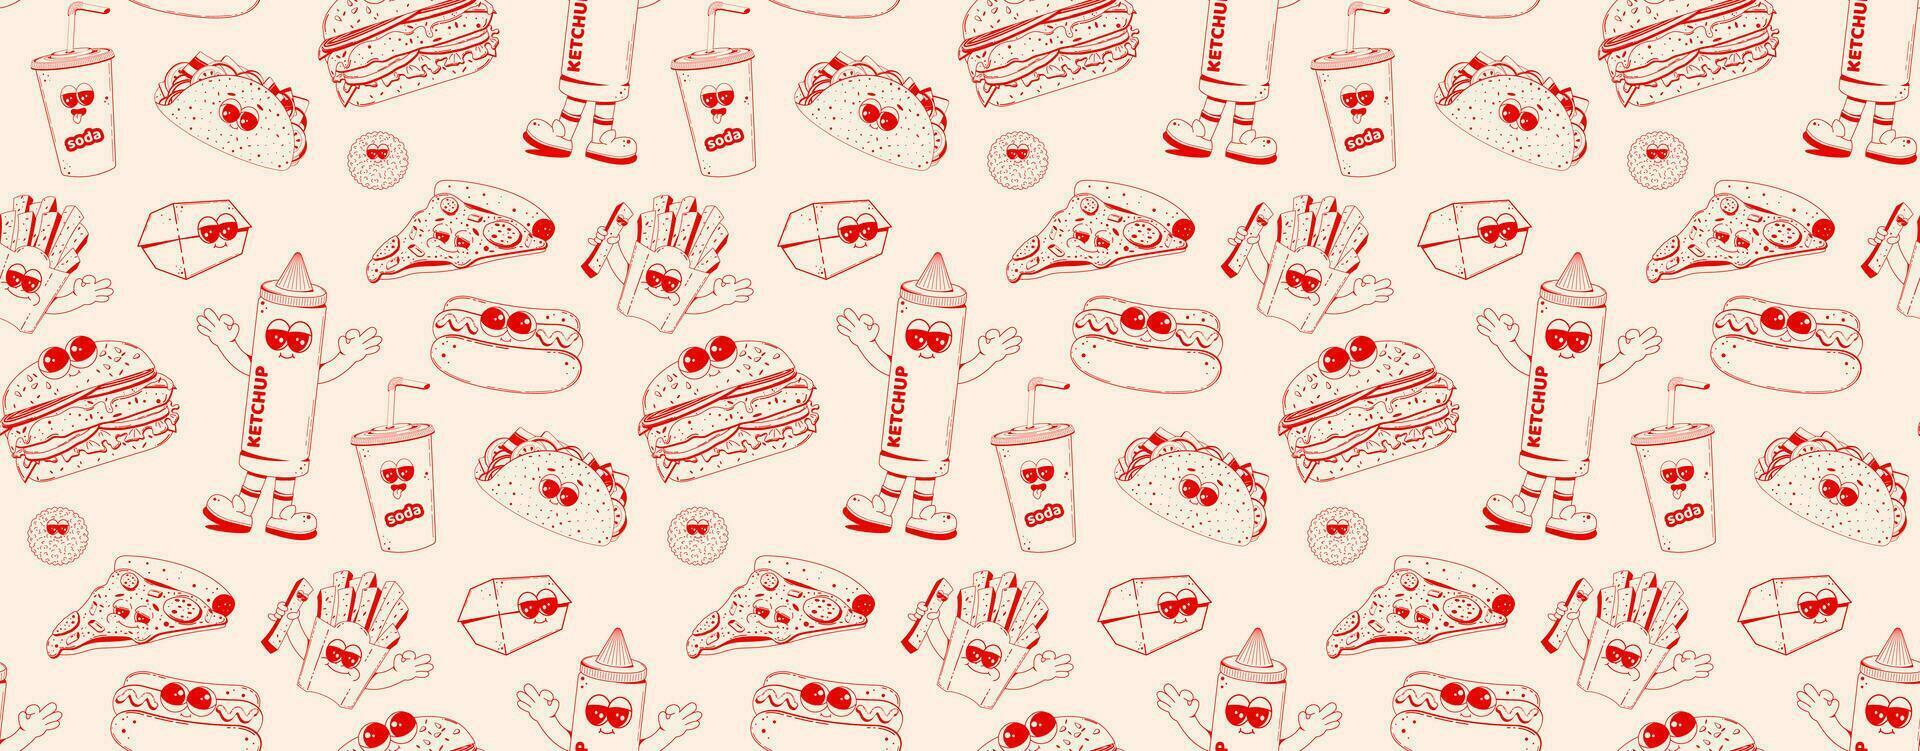 reeks van snel voedsel tekens in retro lineair stijl. Hamburger, pizza, Frisdrank, hod hond, Patat. tekening illustratie in retro tekenfilm stijl. vector